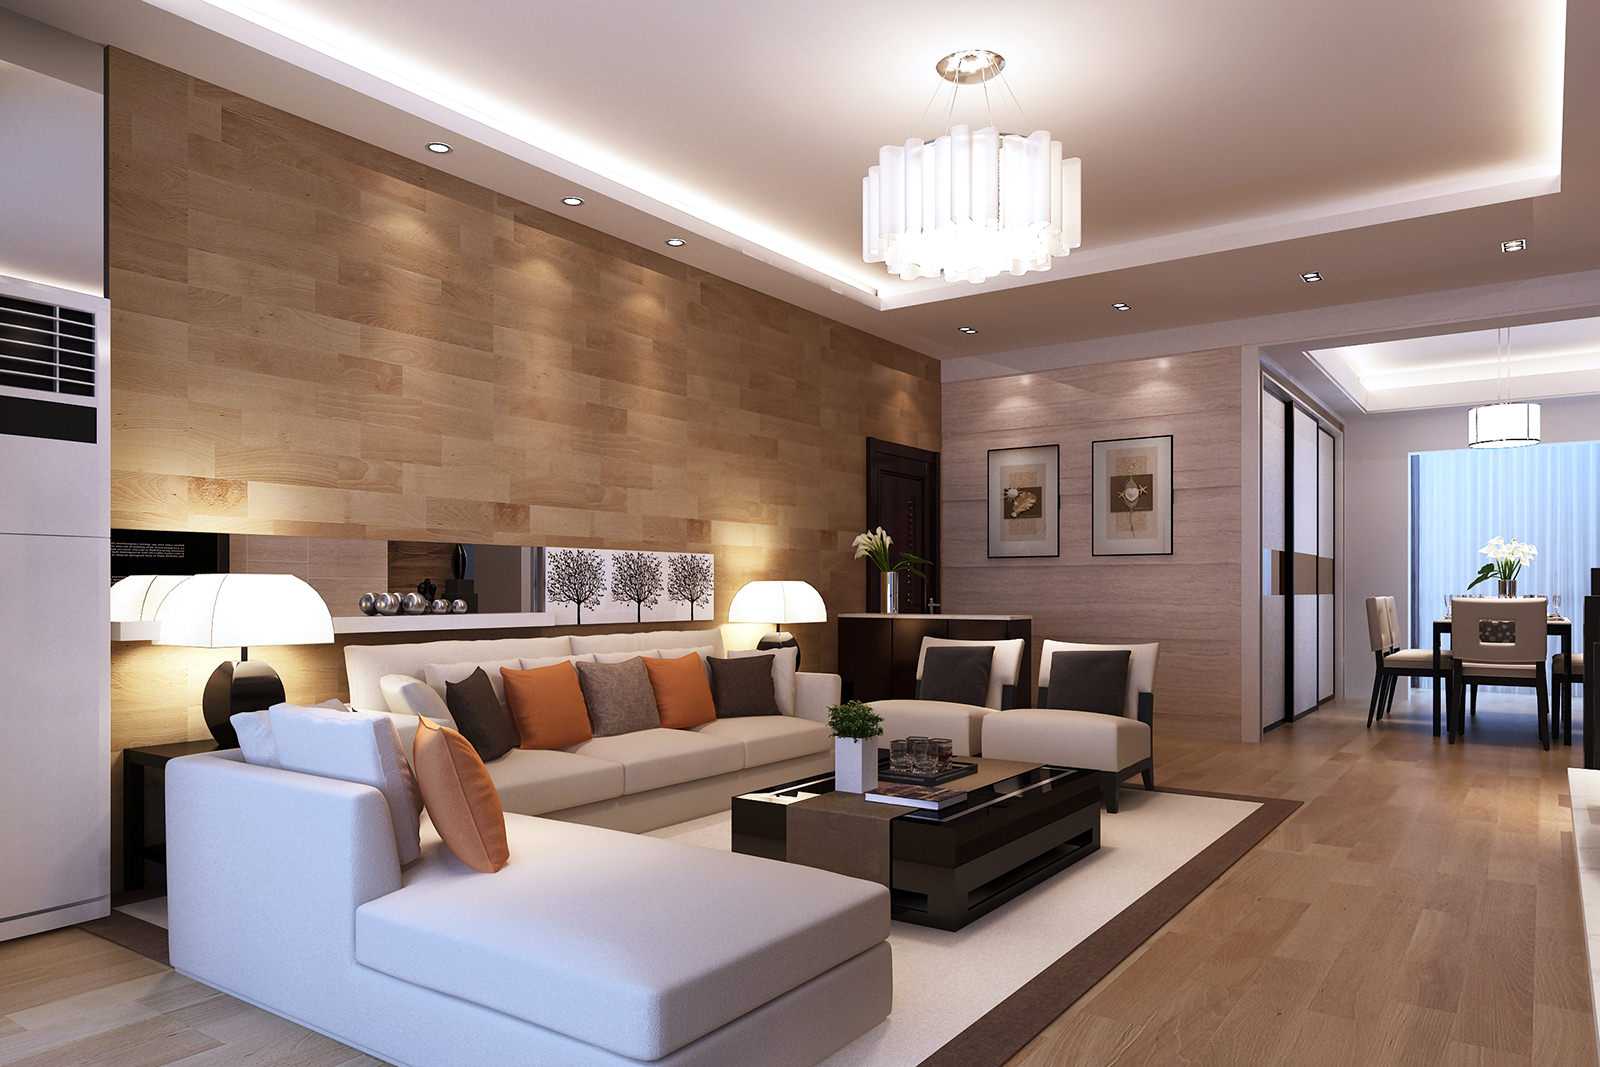 bright bedroom interior in modern style